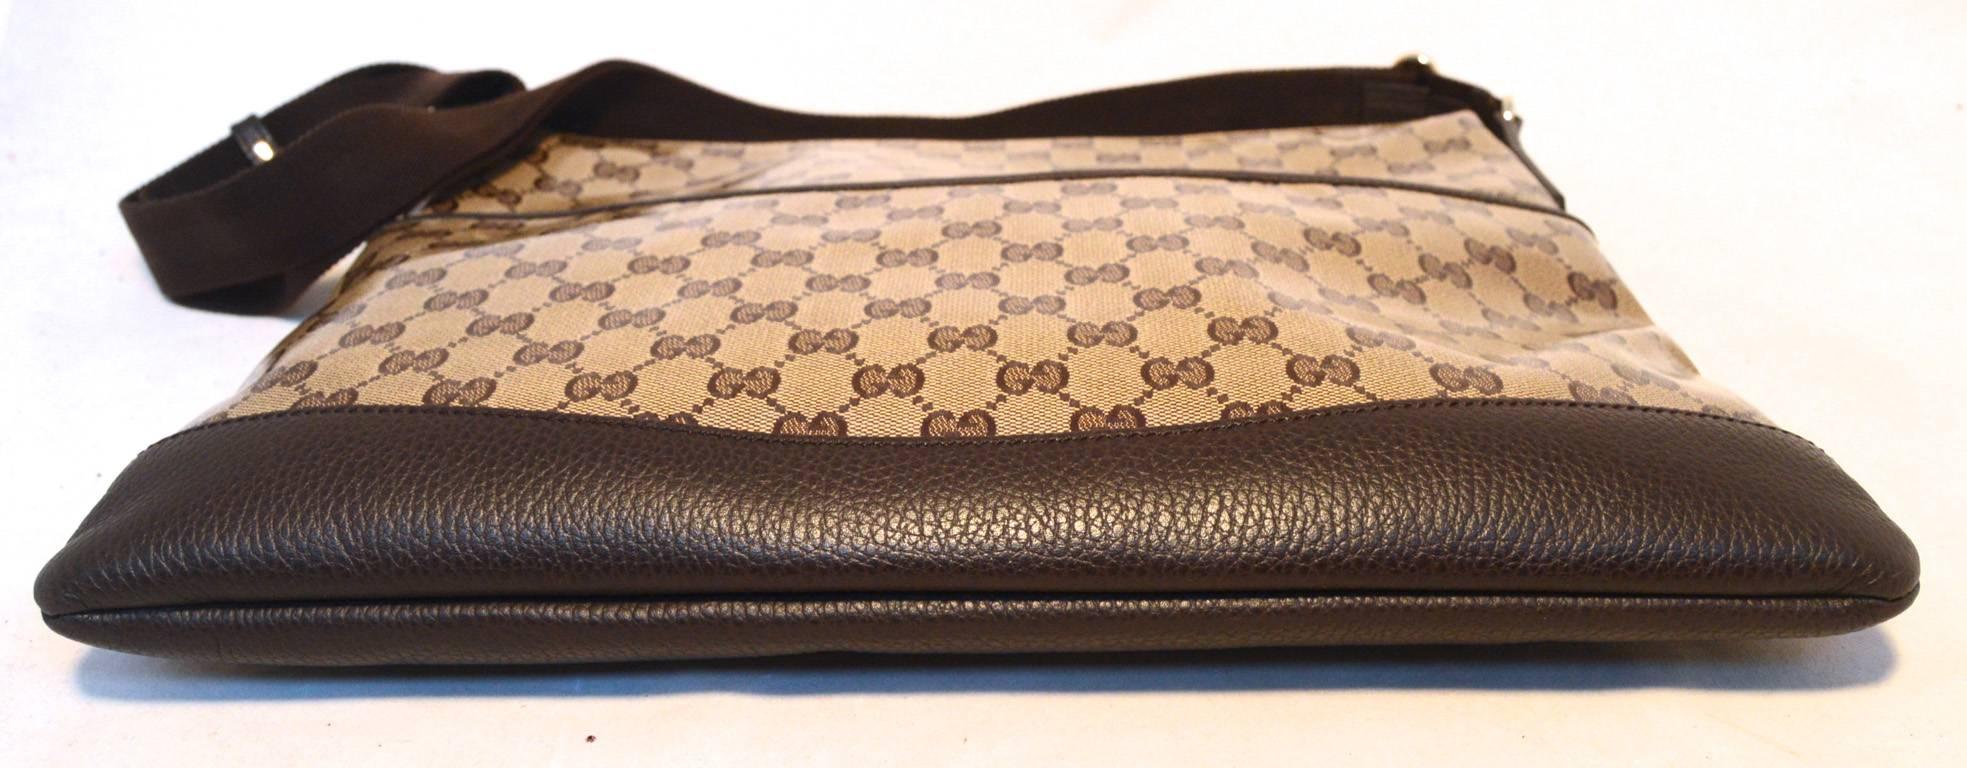 Gucci Coated Monogram Canvas and Leather Trim Shoulder Bag 1